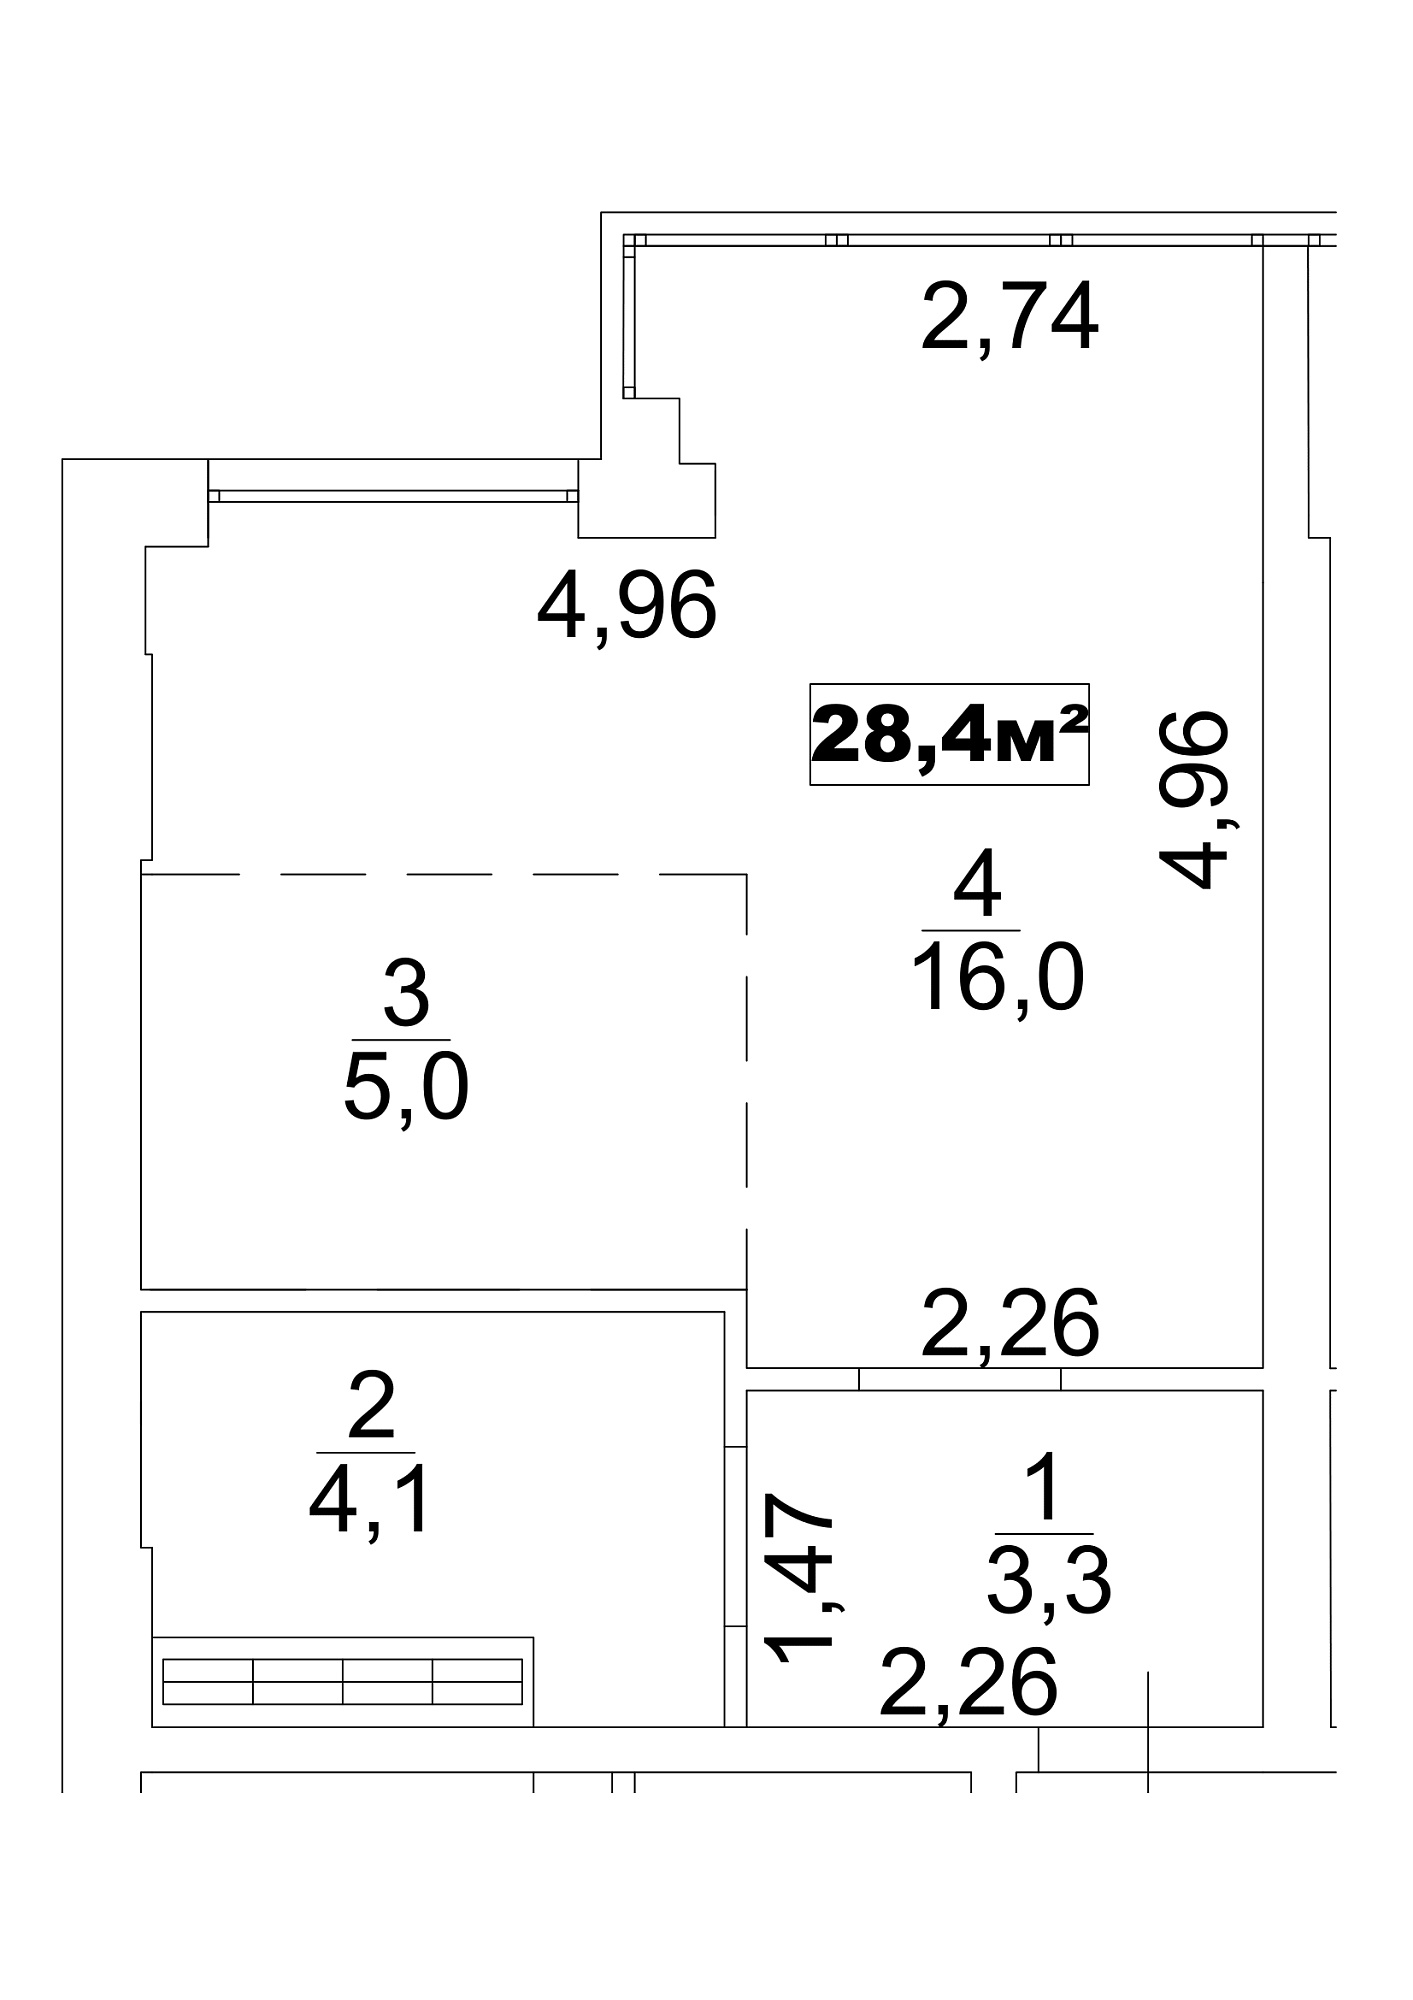 Planning Smart flats area 28.4m2, AB-13-05/0036б.